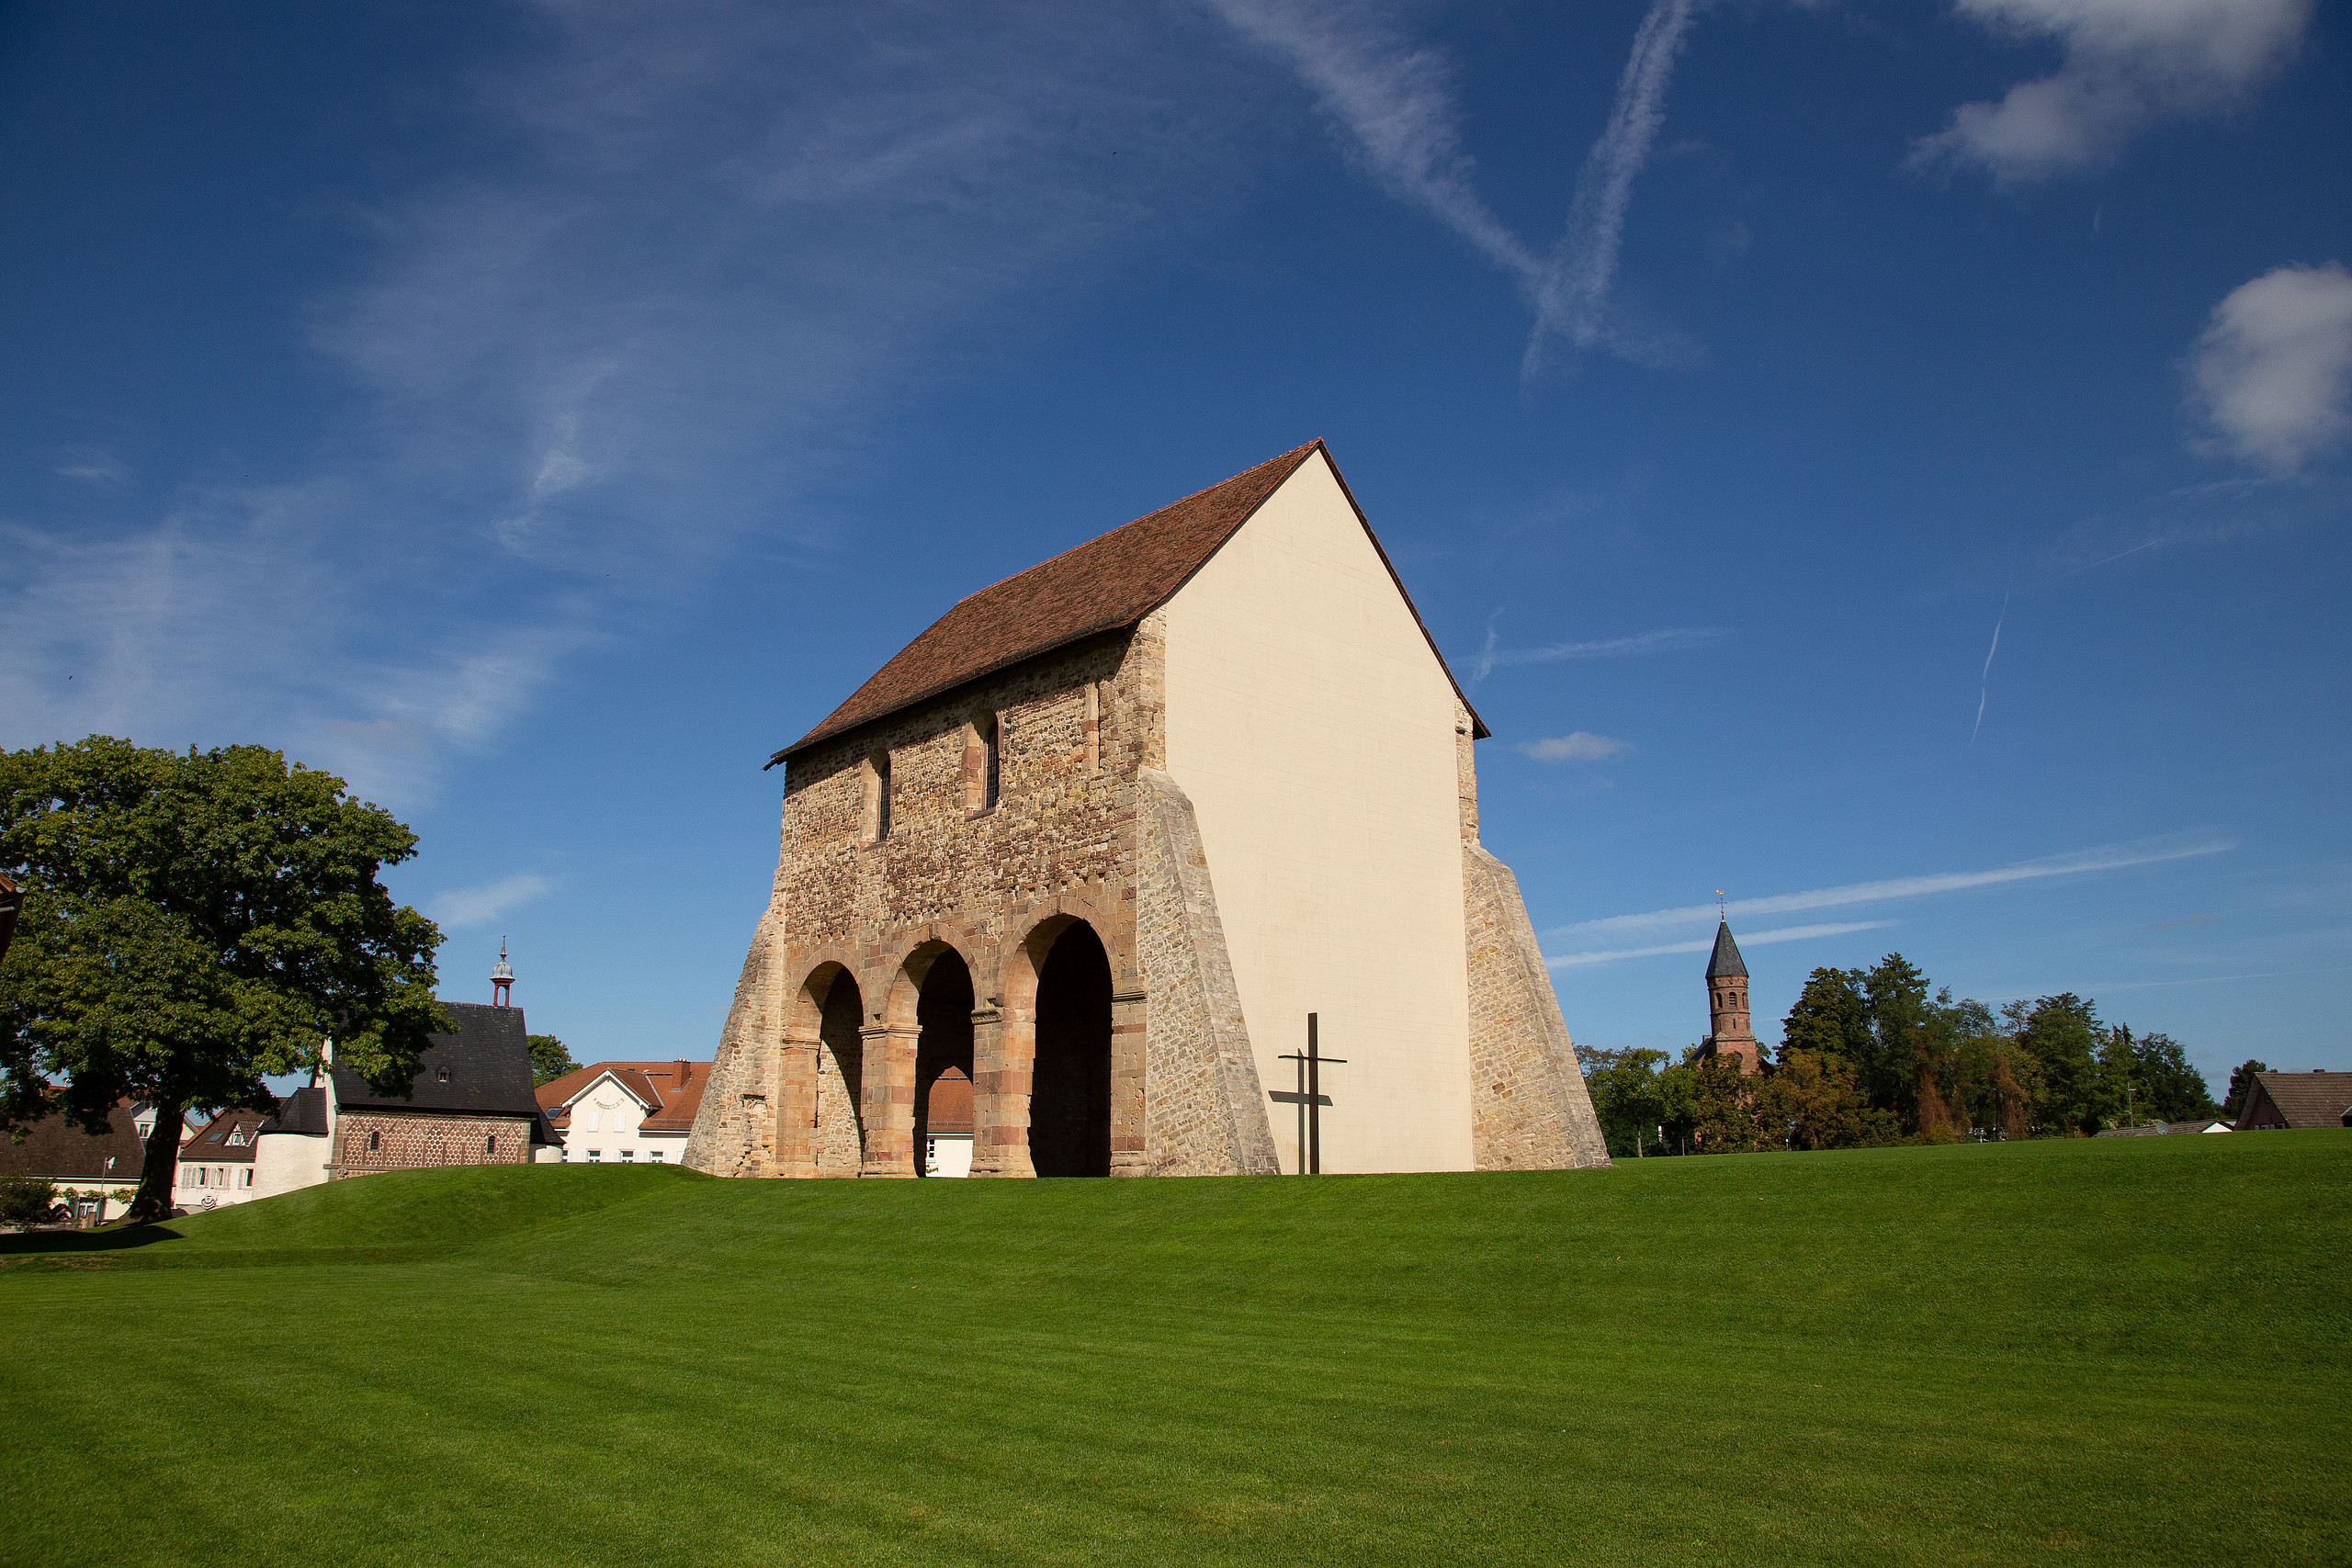 Das berühmte Kloster in Lorsch gehört zum UNESCO-Weltkulturerbe